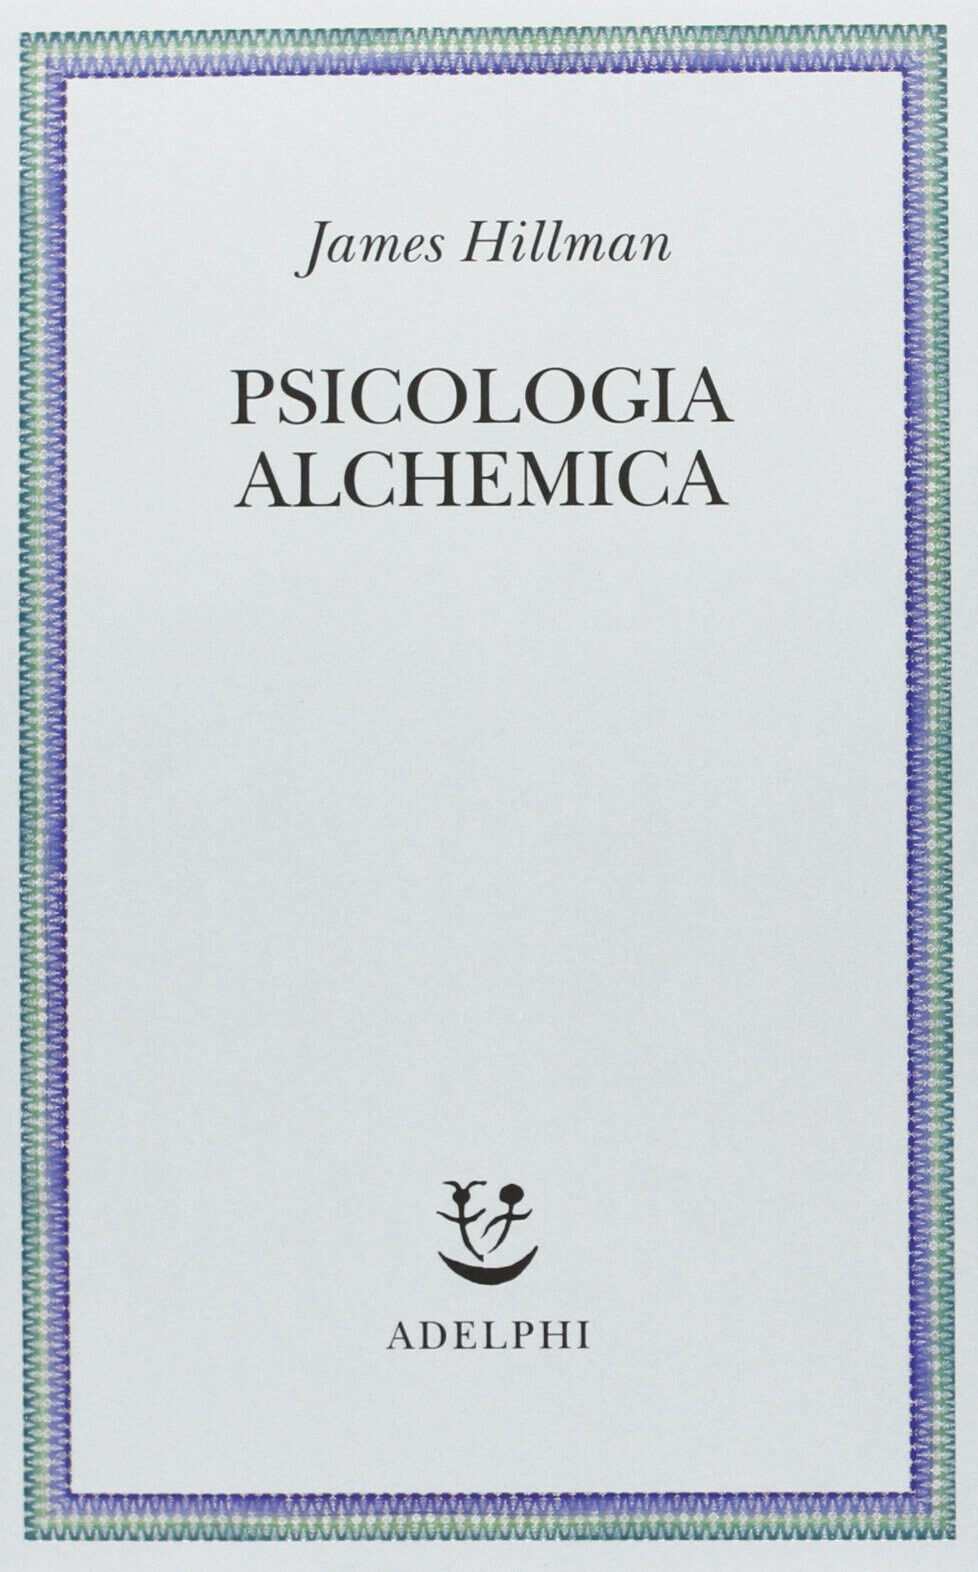 Psicologia alchemica - James Hillman - Adelphi, 2013